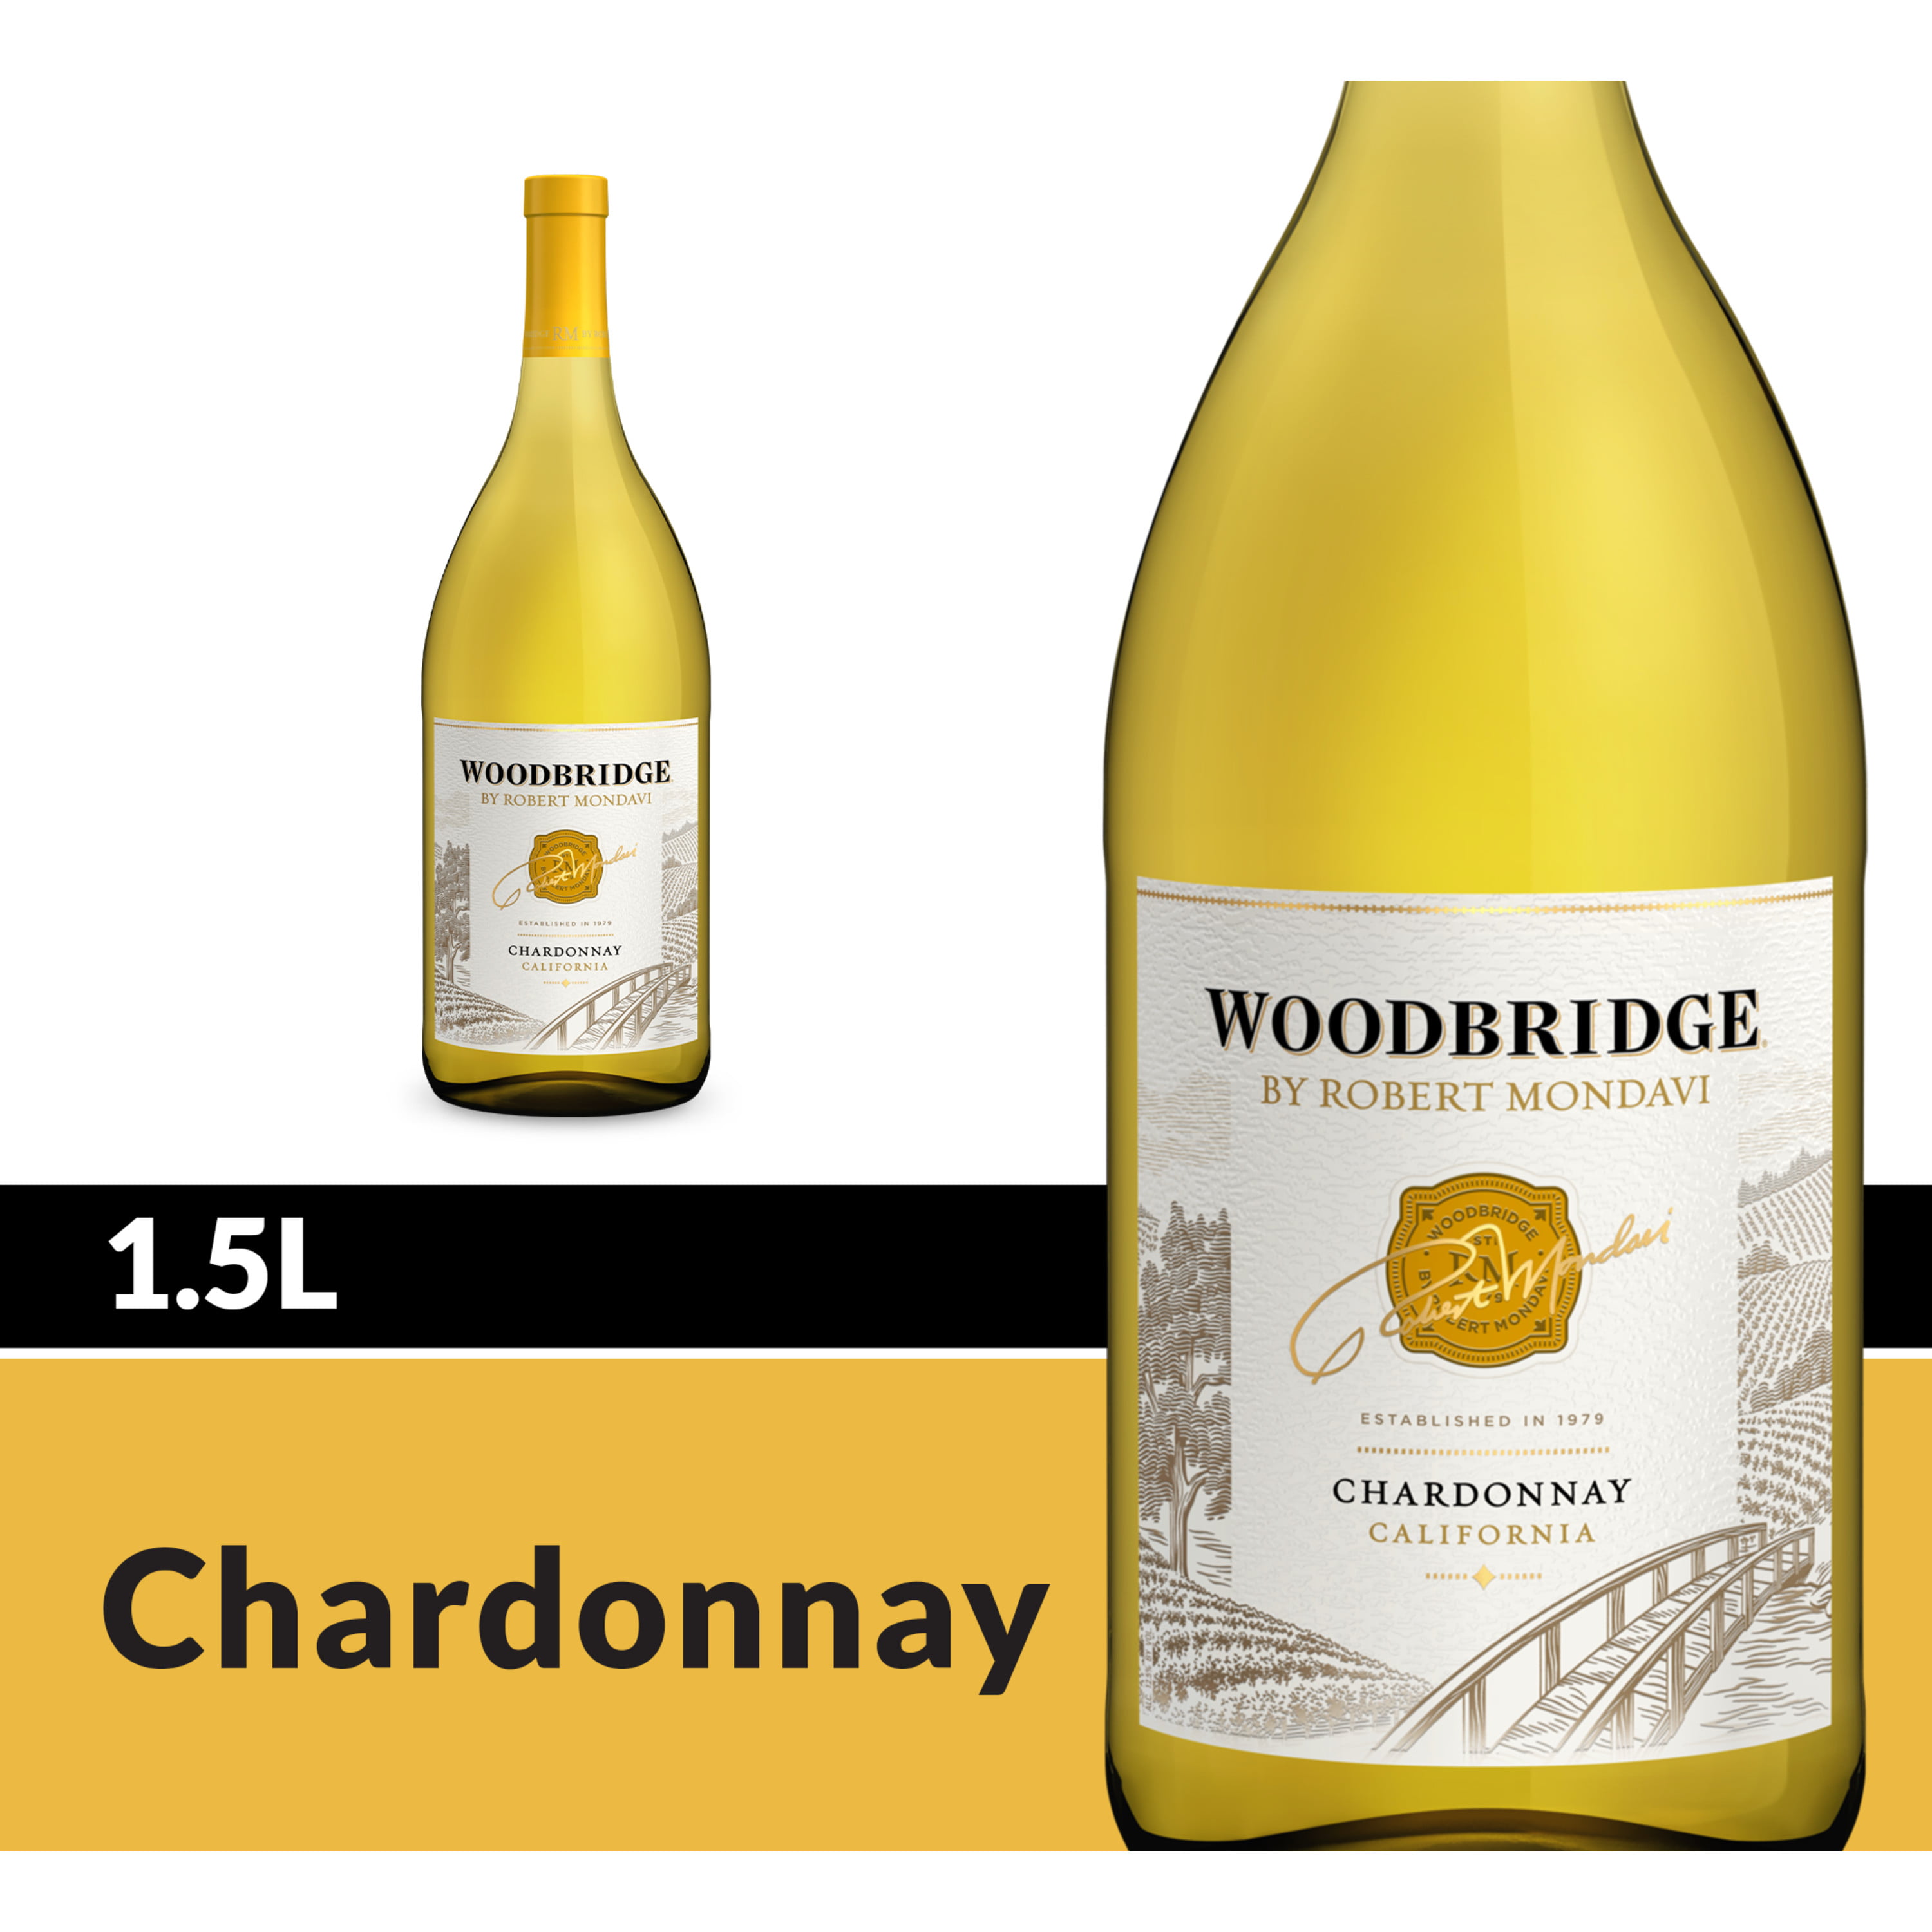 Woodbridge by Robert Mondavi Chardonnay. Robert Mondavi вино Woodbridge. Шардоне Калифорния.